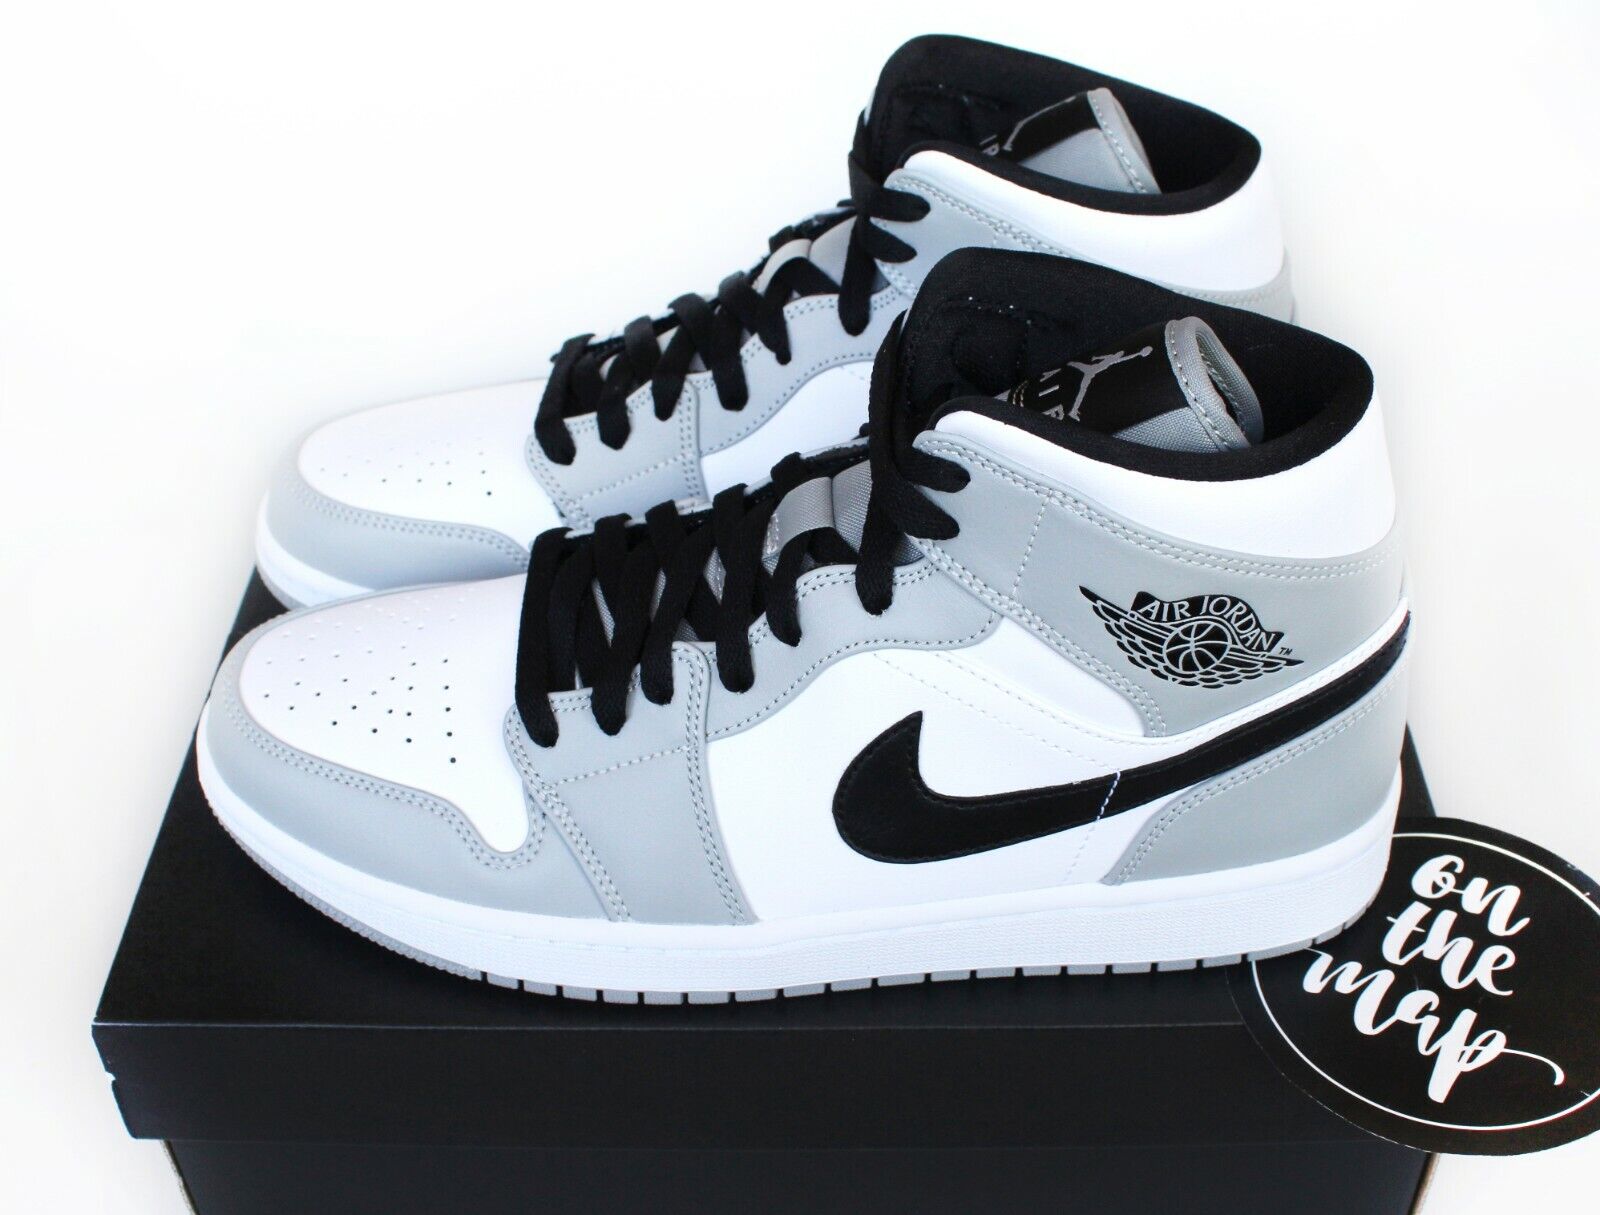 Nike Air Jordan 1 Retro Mid Smoke Grey White Black UK 3 US 3.5 New | eBay